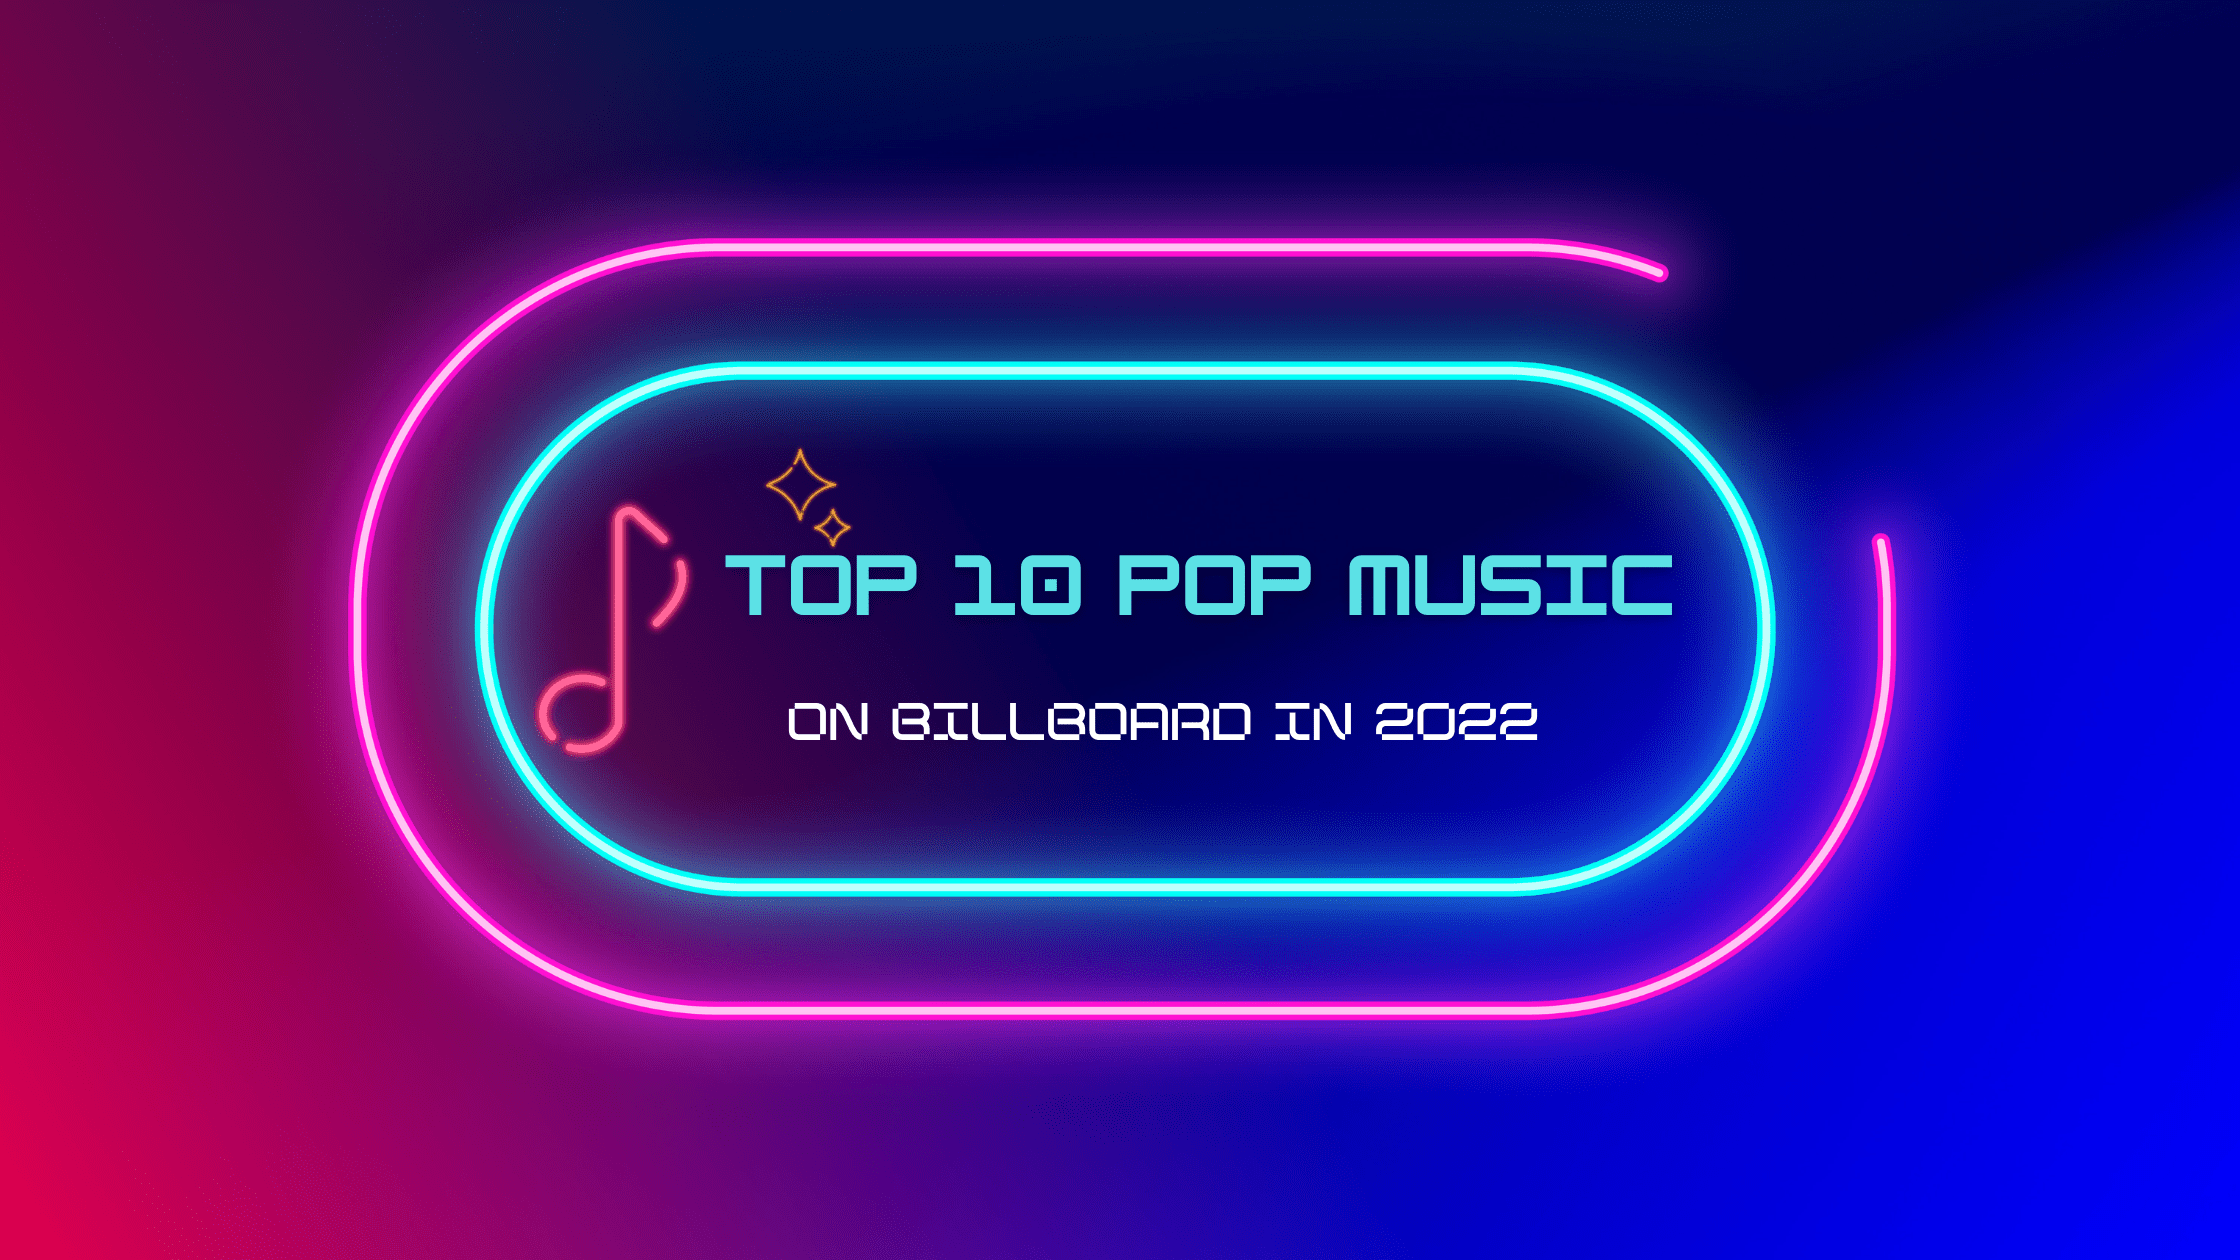 Top 10 Pop Music on Billboard in September 2022.png